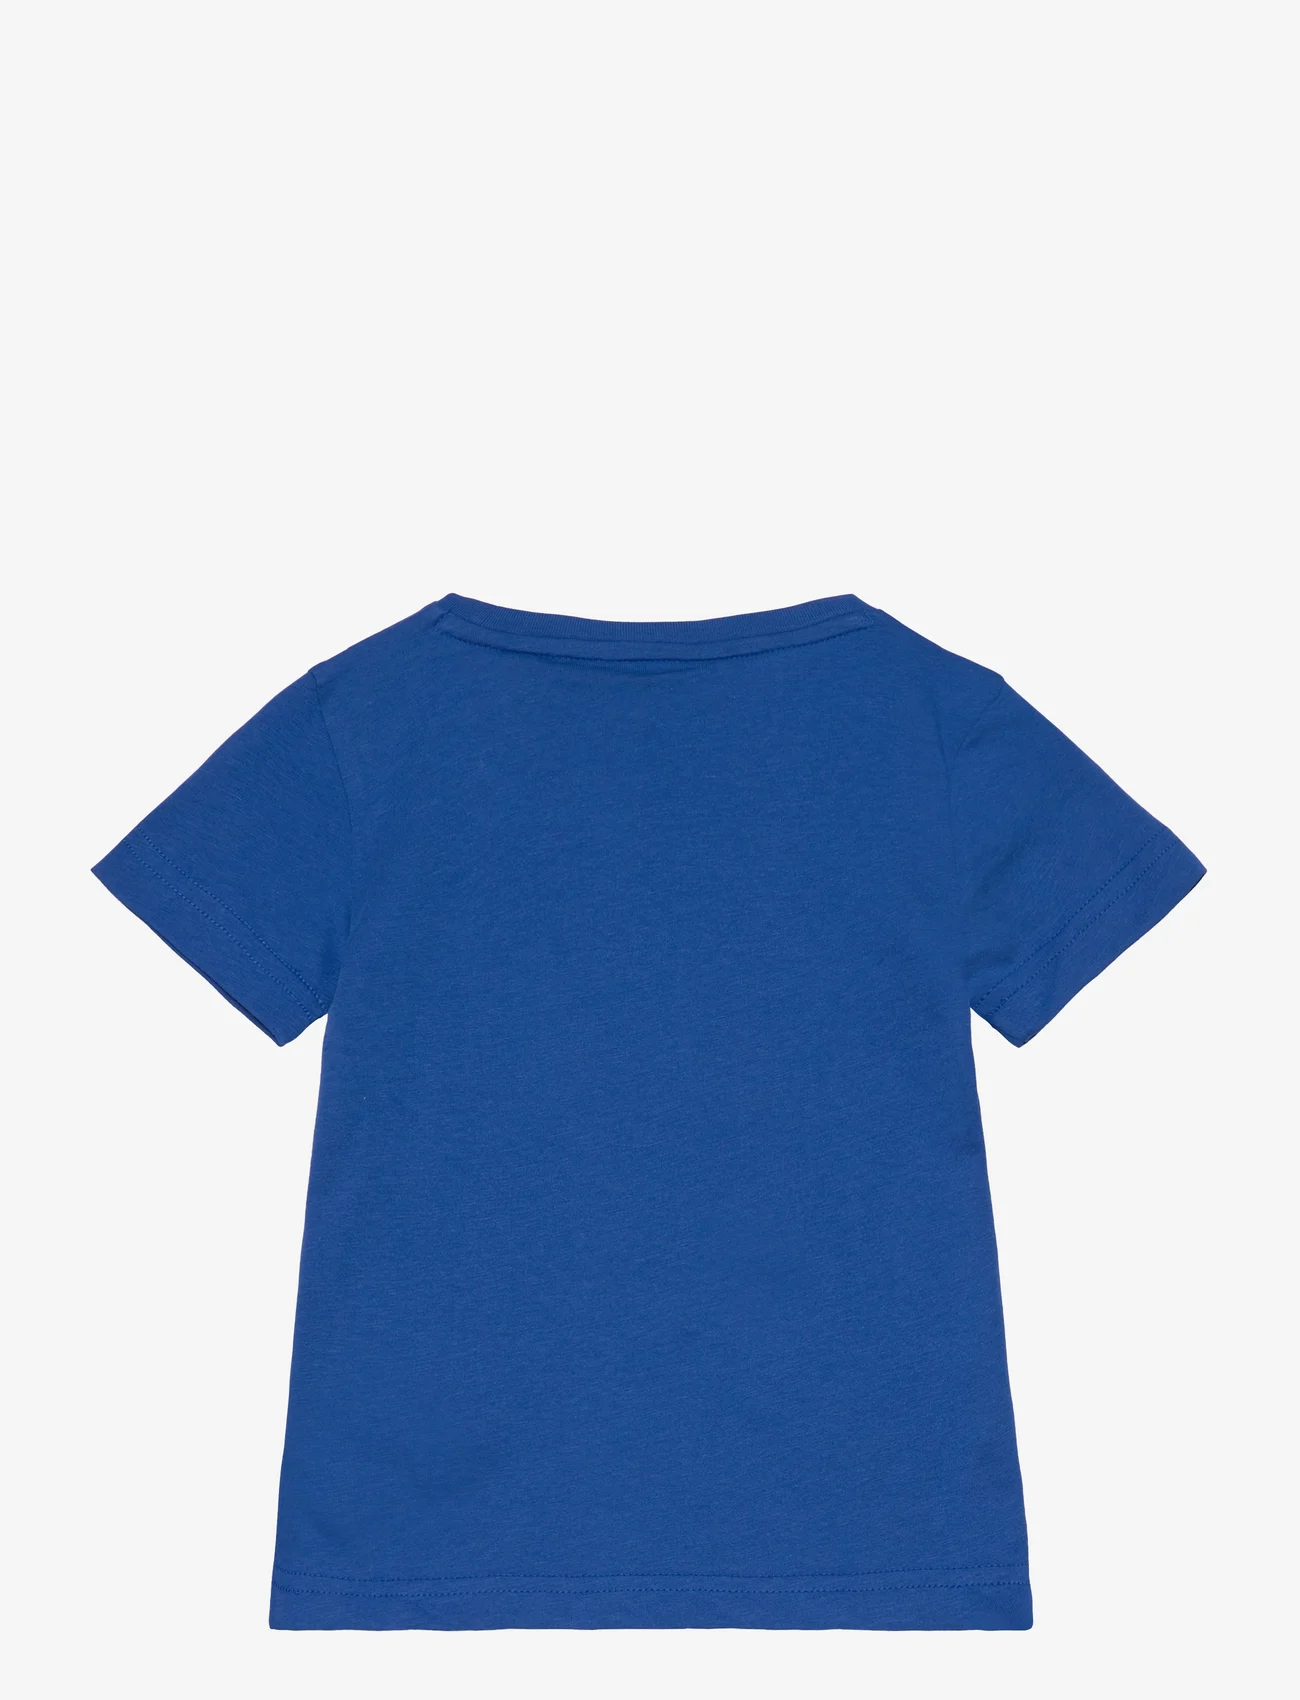 GANT - ARCHIVE SHIELD SS T-SHIRT - kortärmade t-shirts - lapis blue - 1